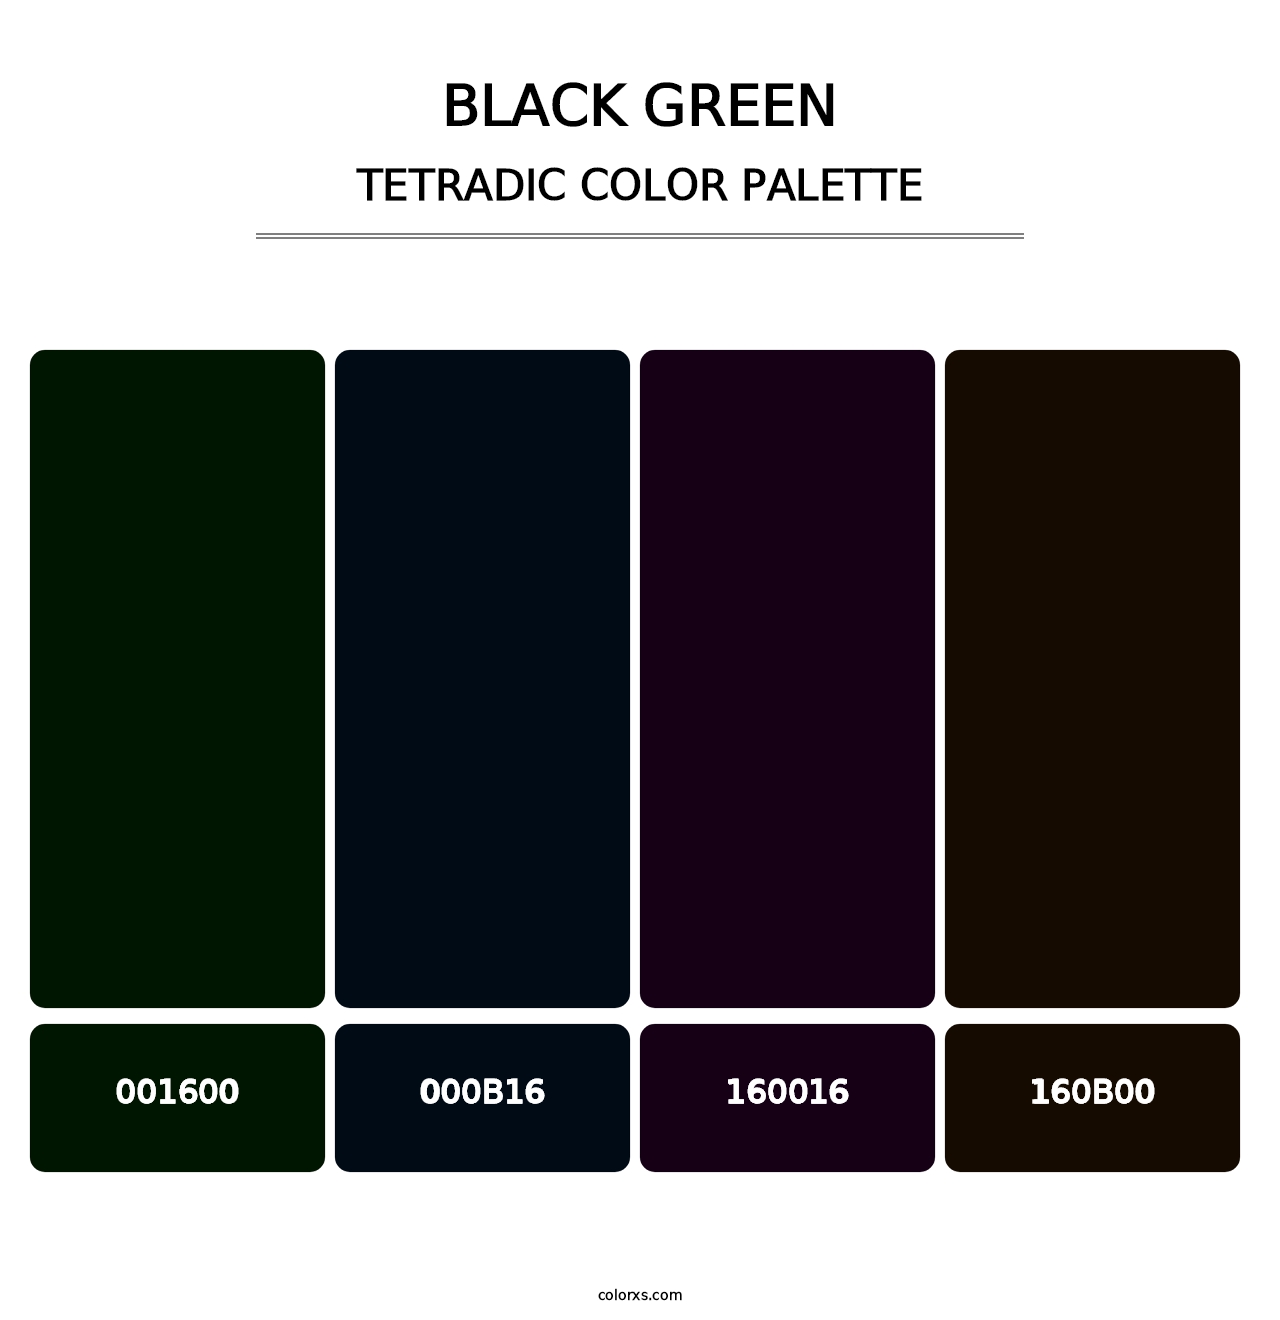 Black Green - Tetradic Color Palette